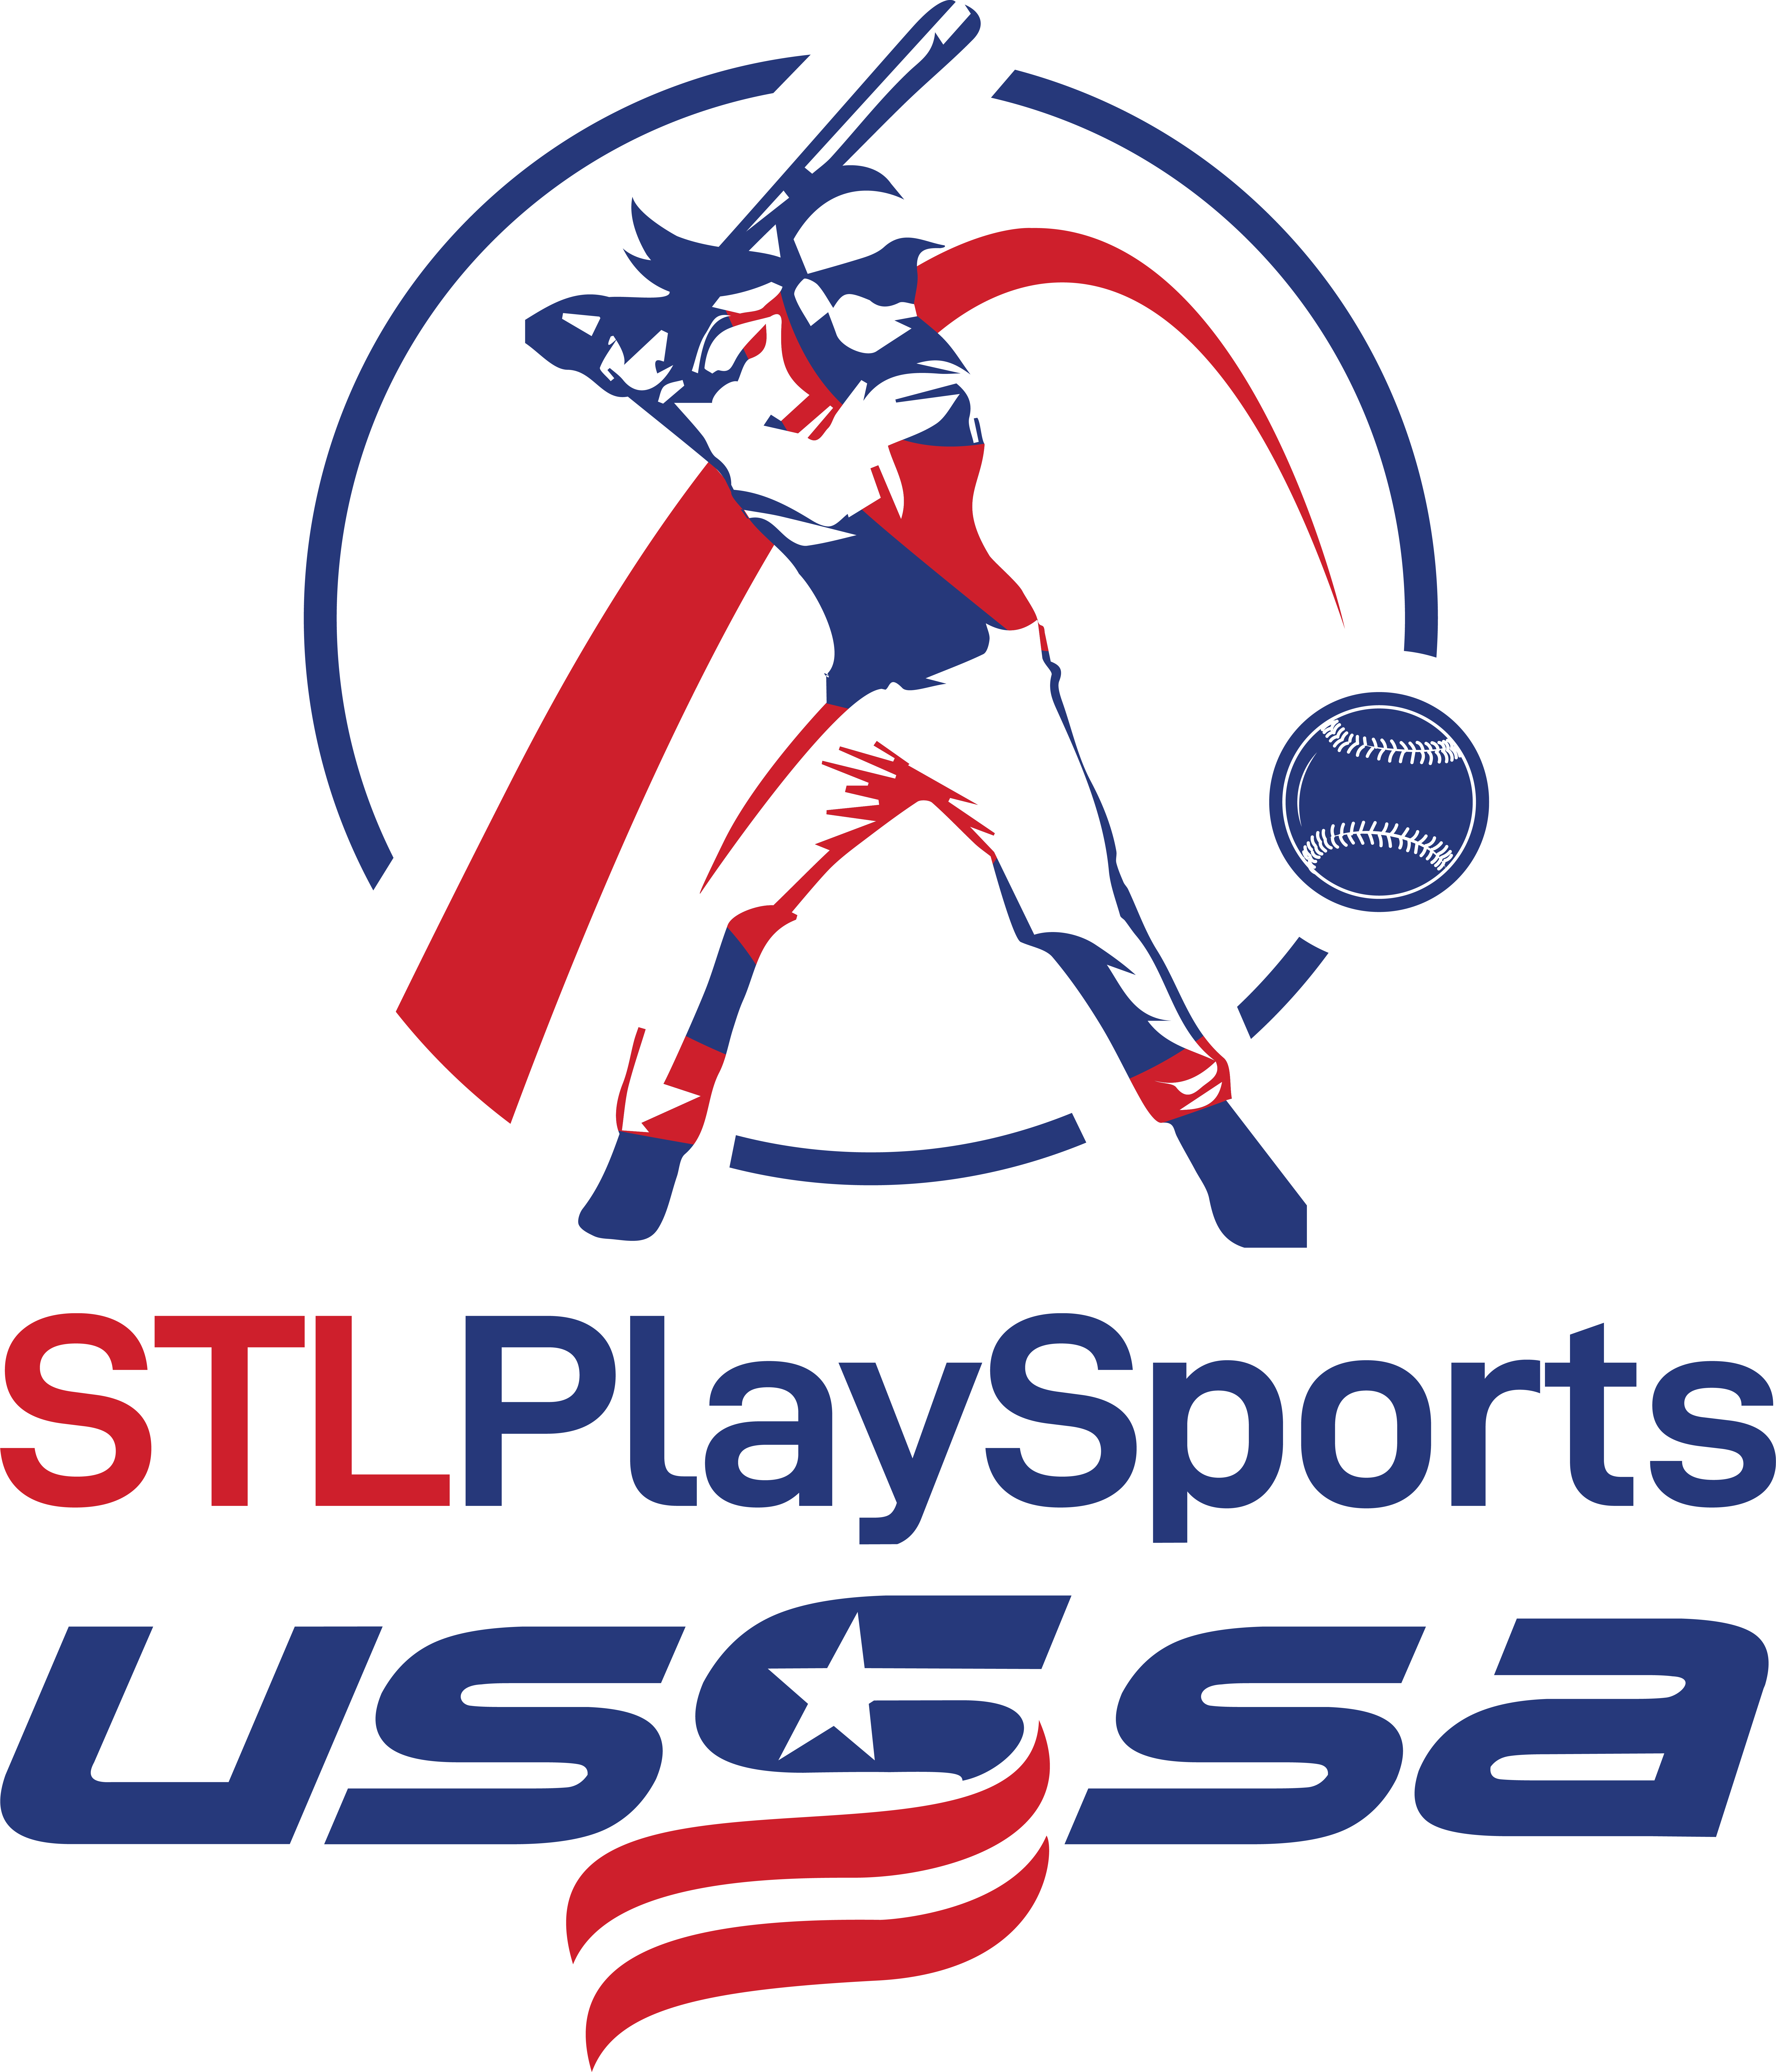 stlplaysports-and-usssa-logo_1643814613.jpg